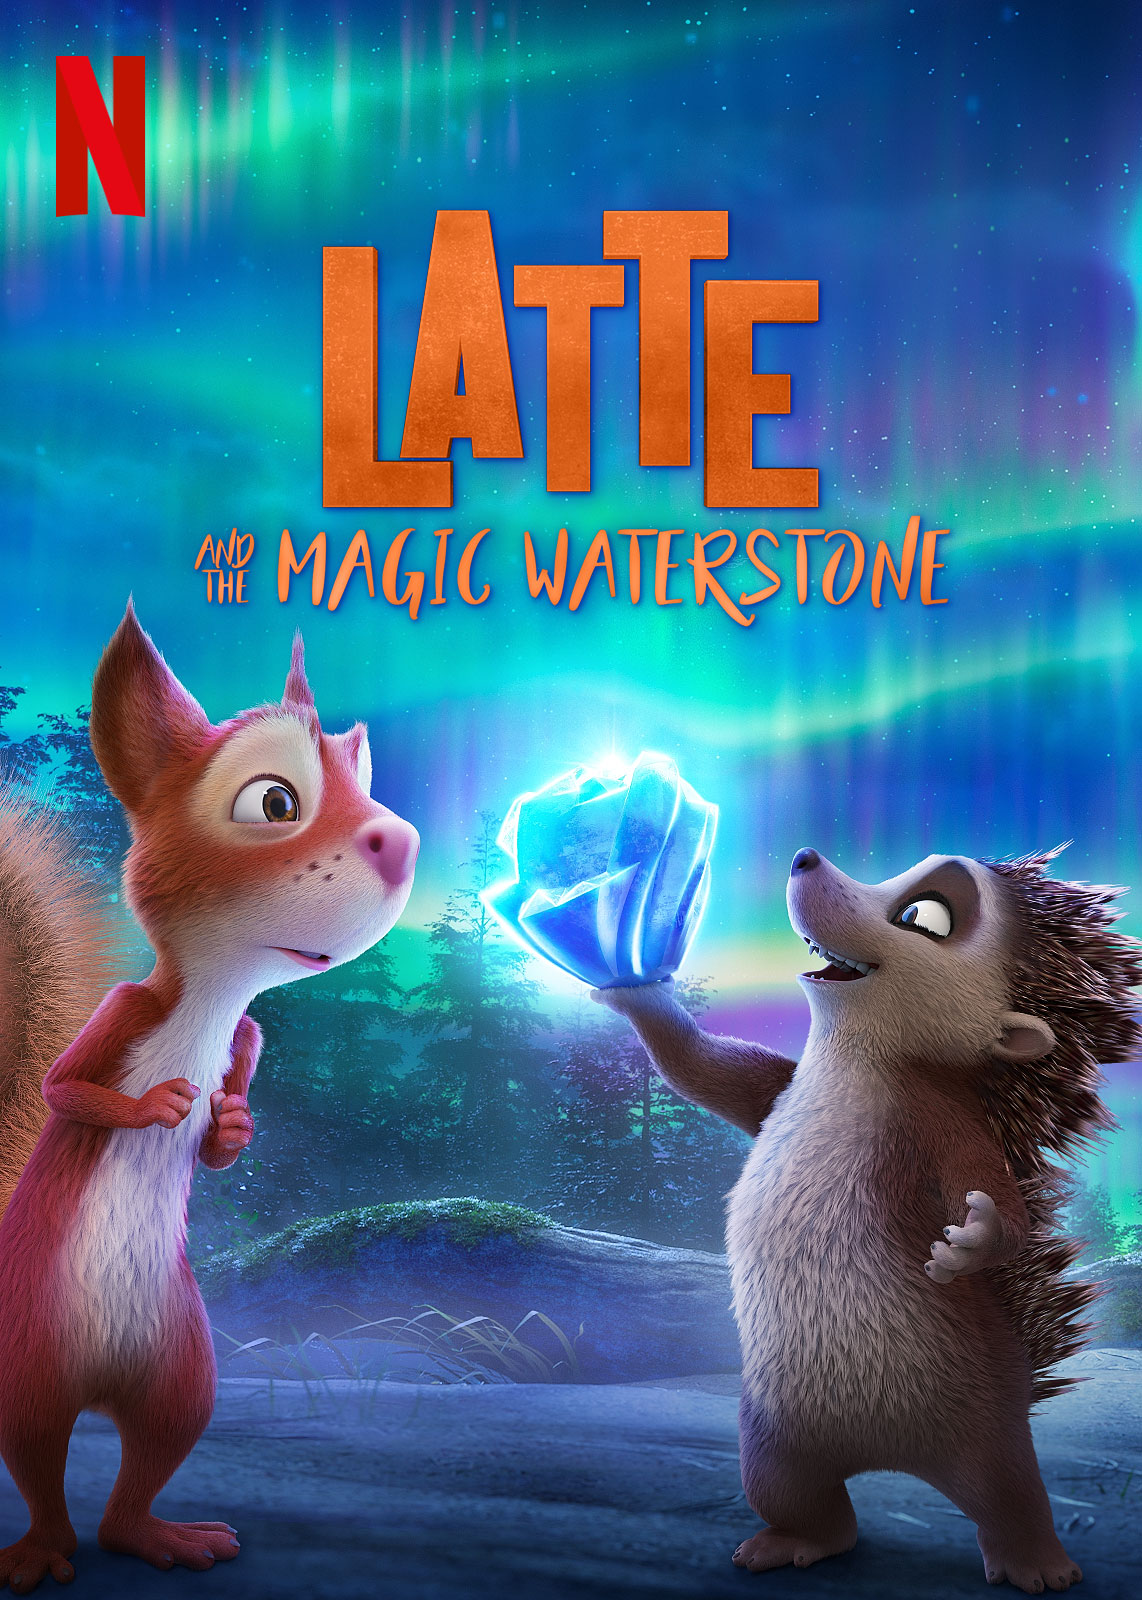 Latte and the Magic Waterstone | Netflix VDA Concept, Finishing & Illustration